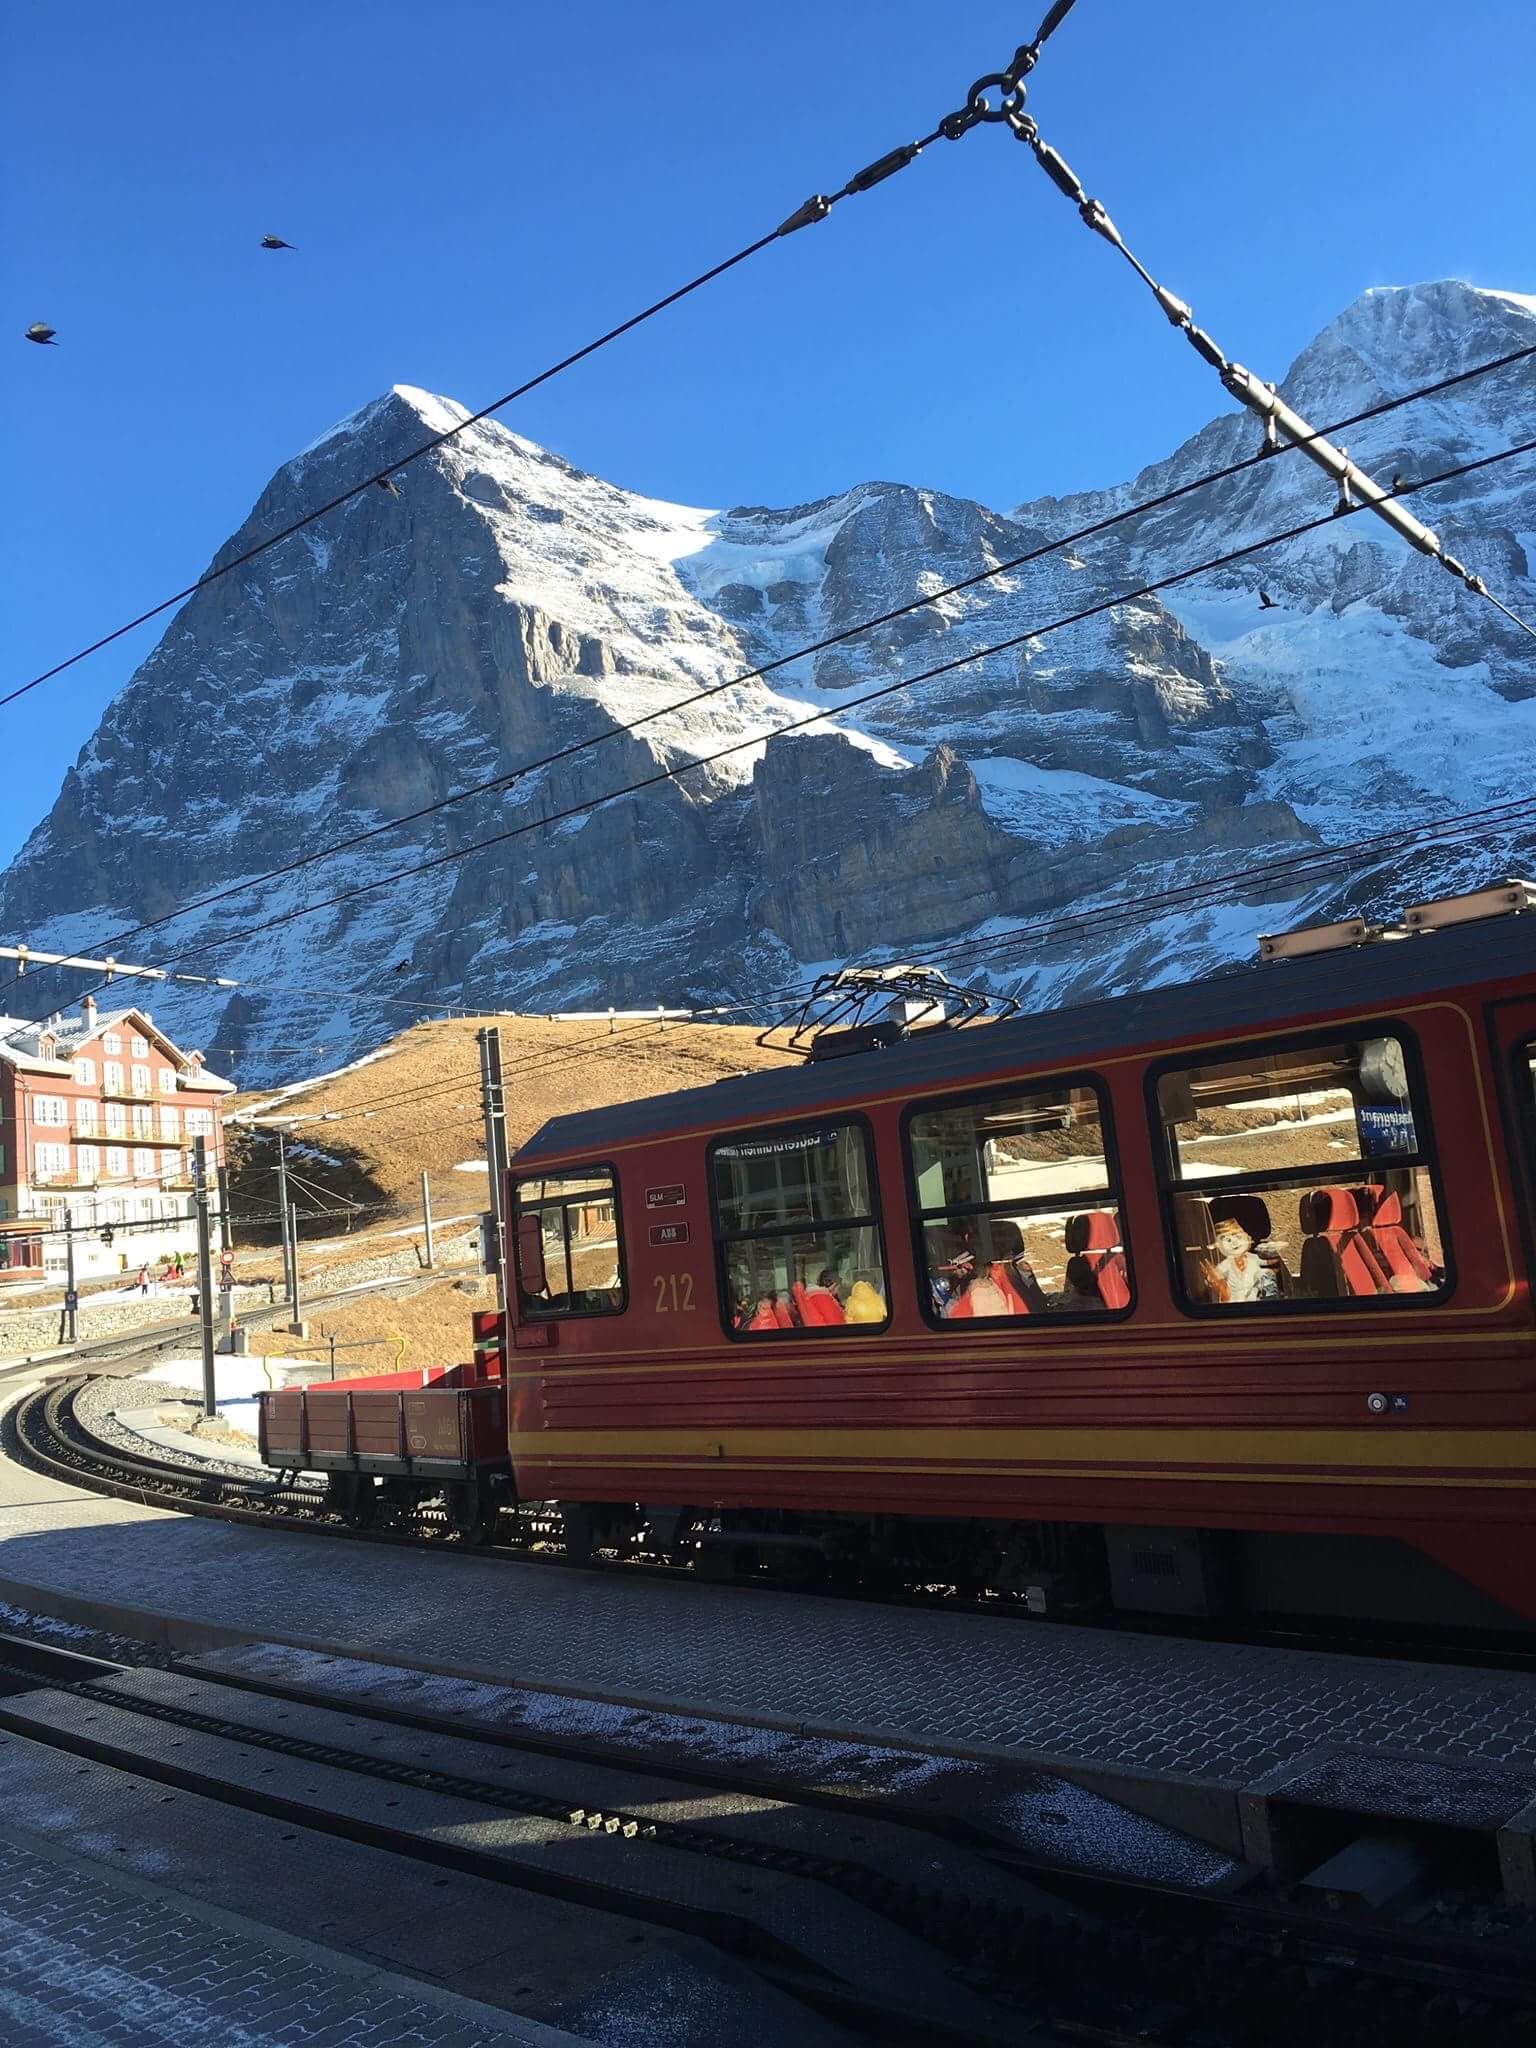 THE LITTLE RED TRAIN - Switzerland